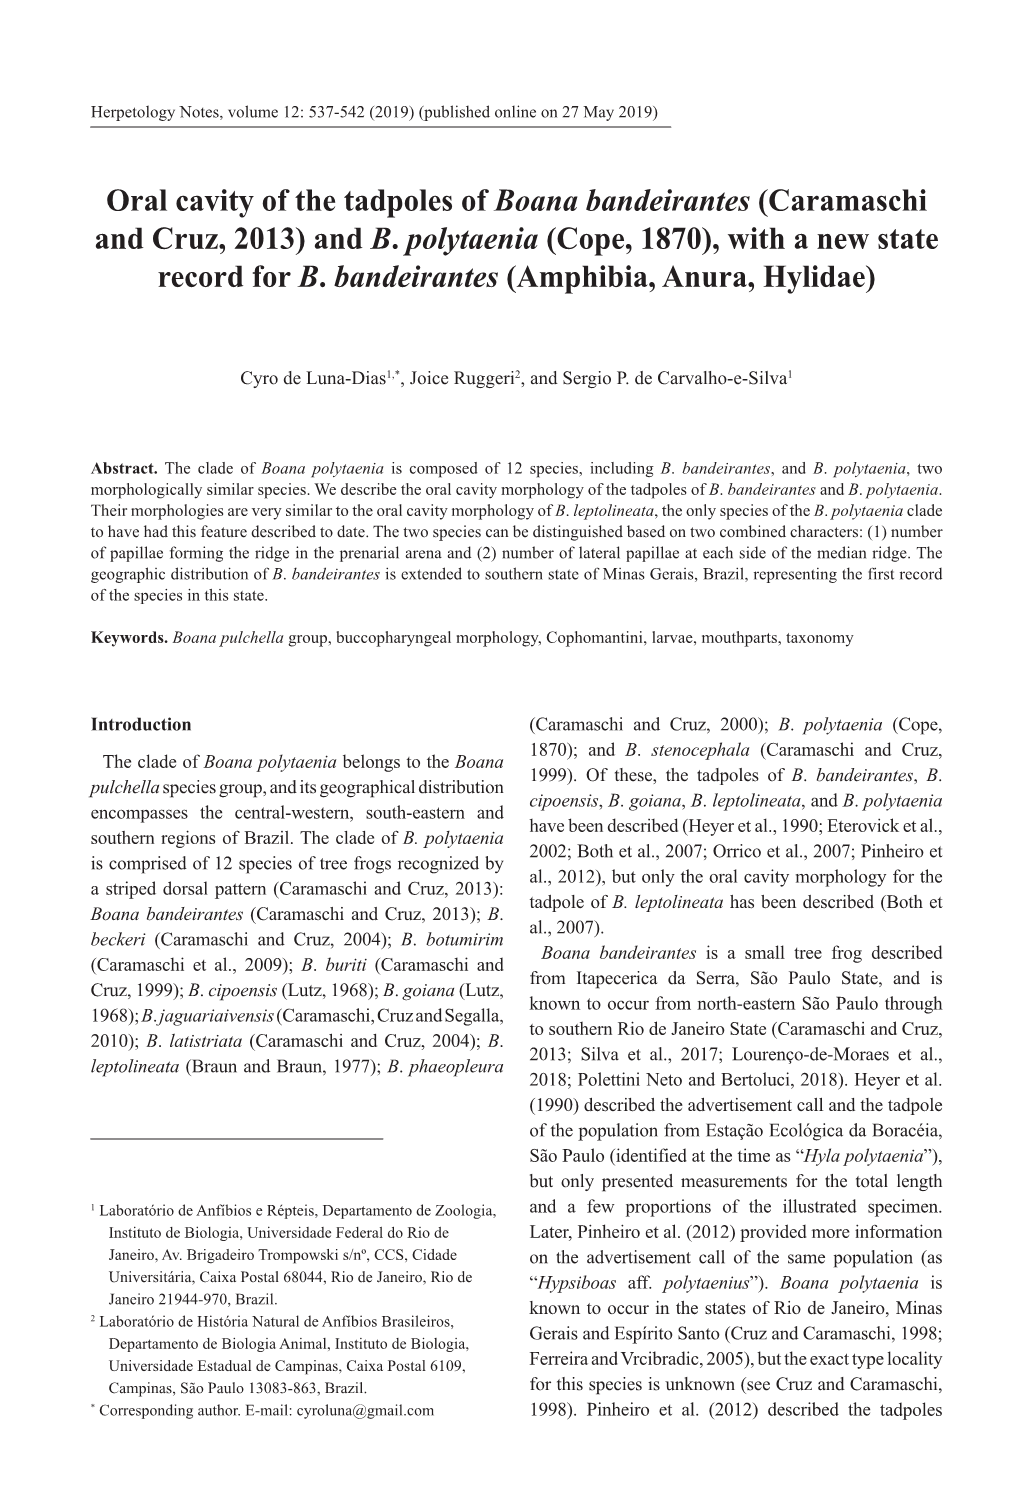 Oral Cavity of the Tadpoles of Boana Bandeirantes (Caramaschi and Cruz, 2013) and B